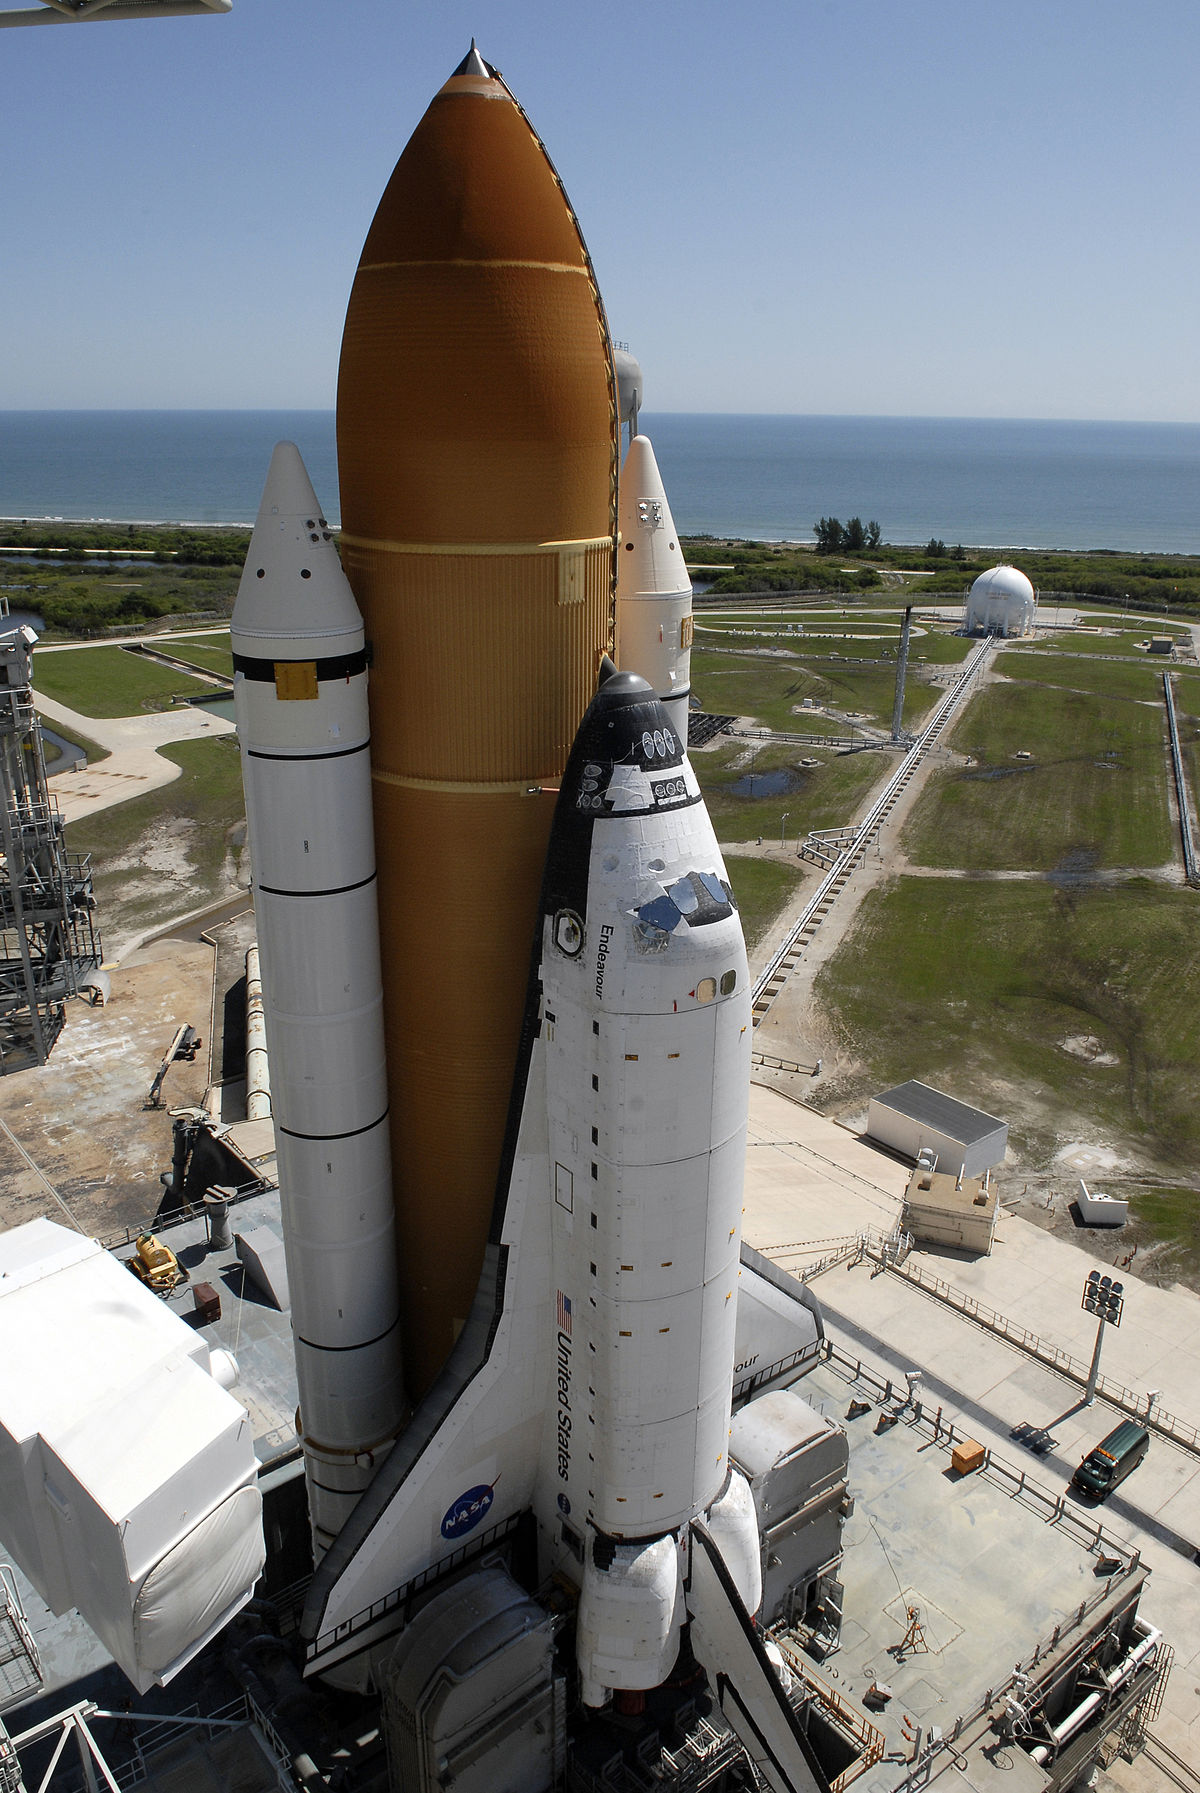 Endeavor space shuttle photo